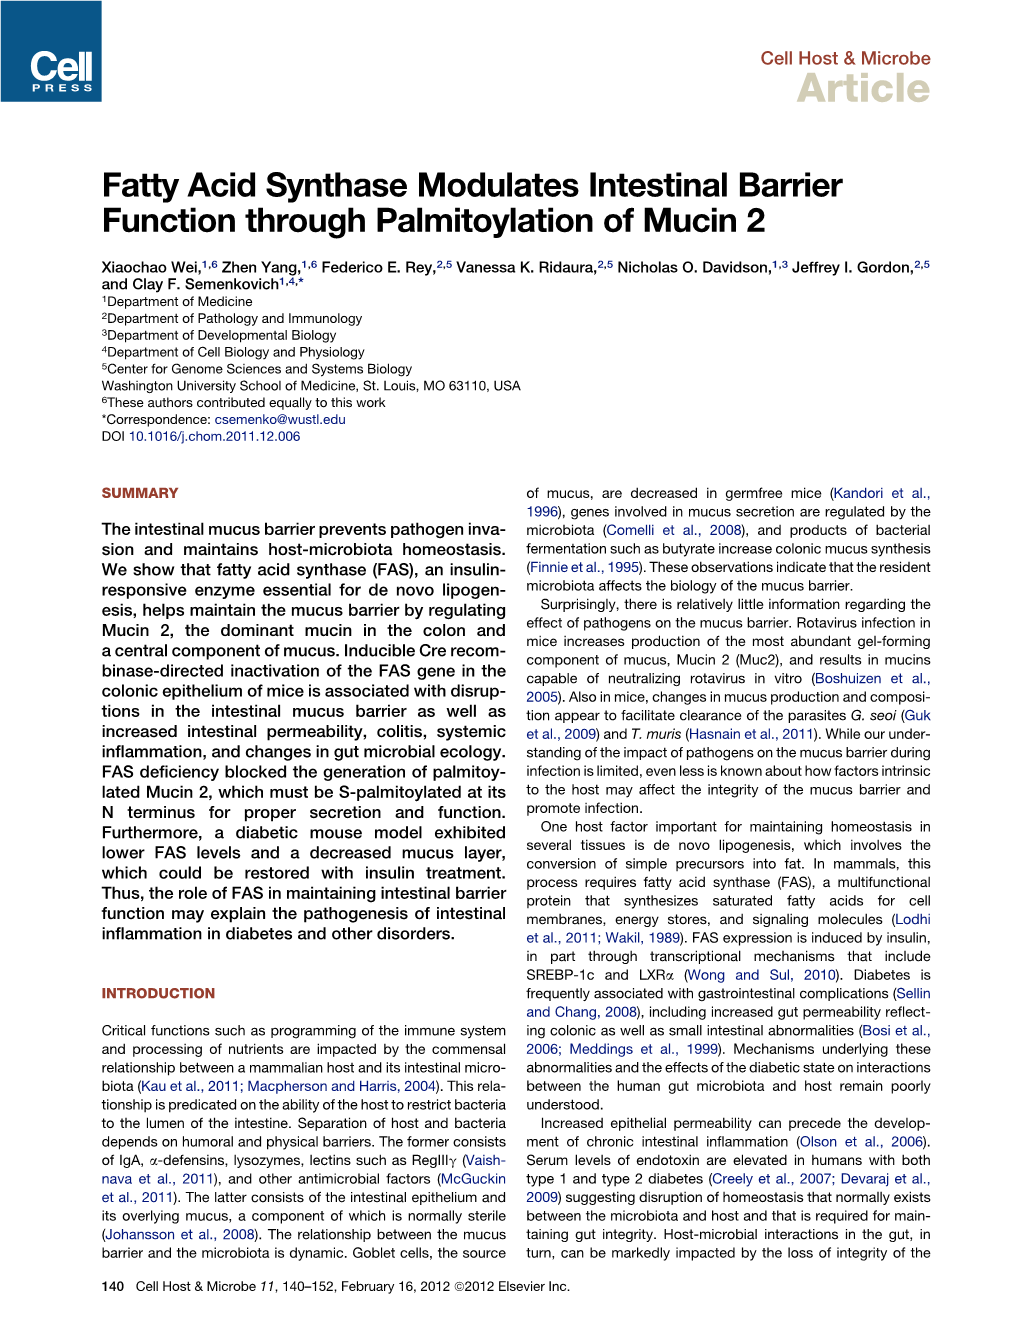 Fatty Acid Synthase Modulates Intestinal Barrier Function Through Palmitoylation of Mucin 2